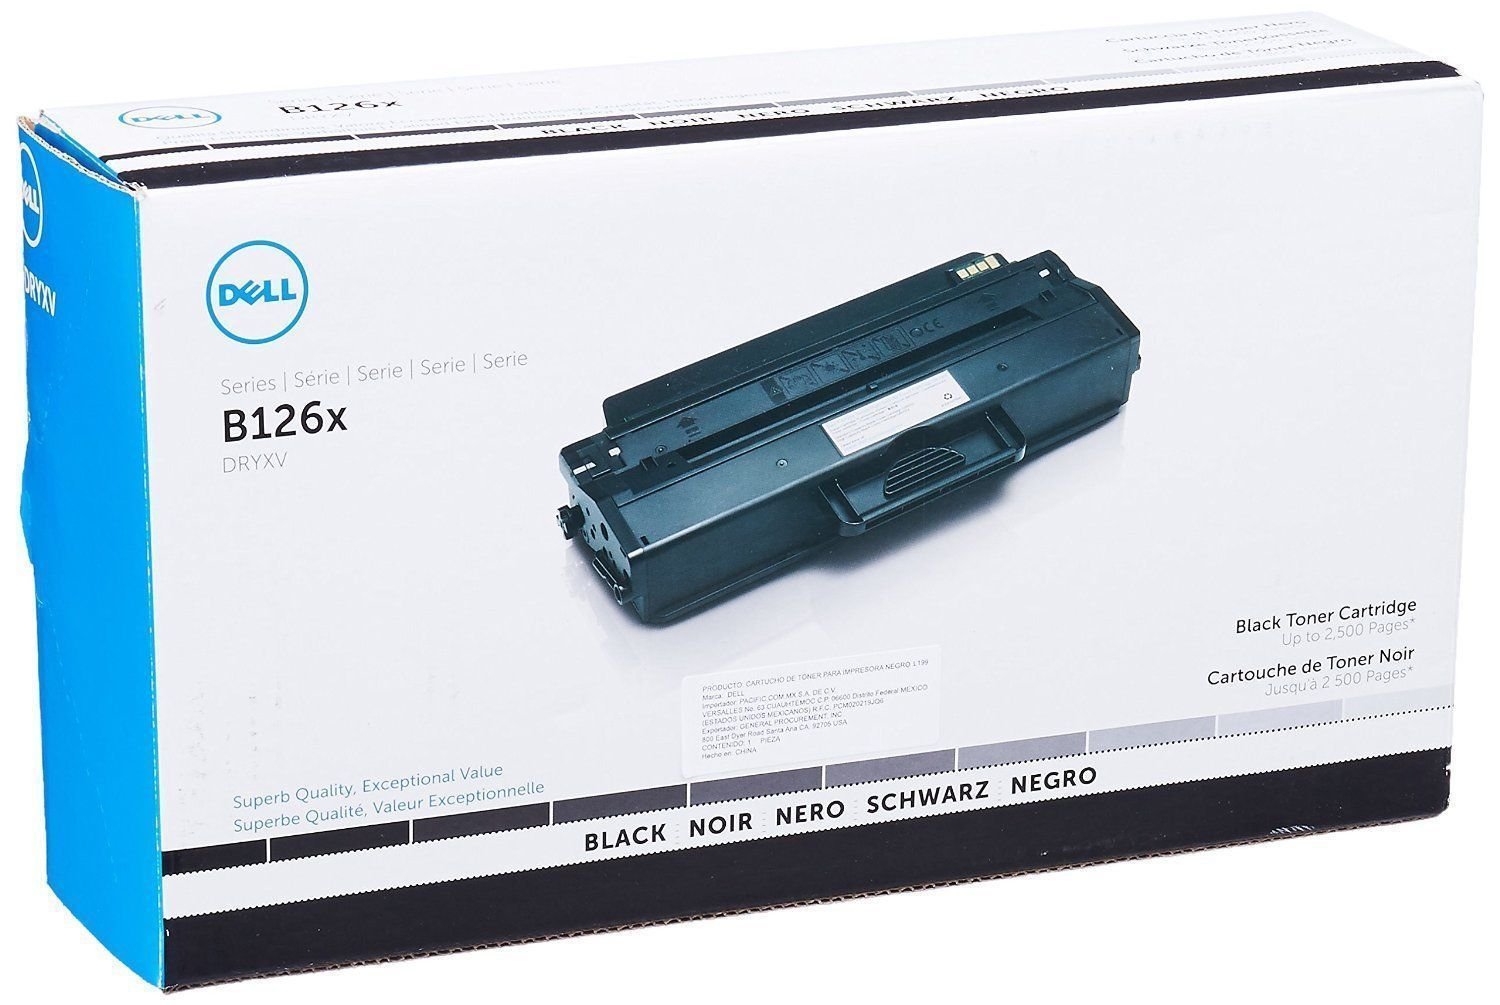 Genuine Dell B126x printer DRYXV Black Toner Cartridge New